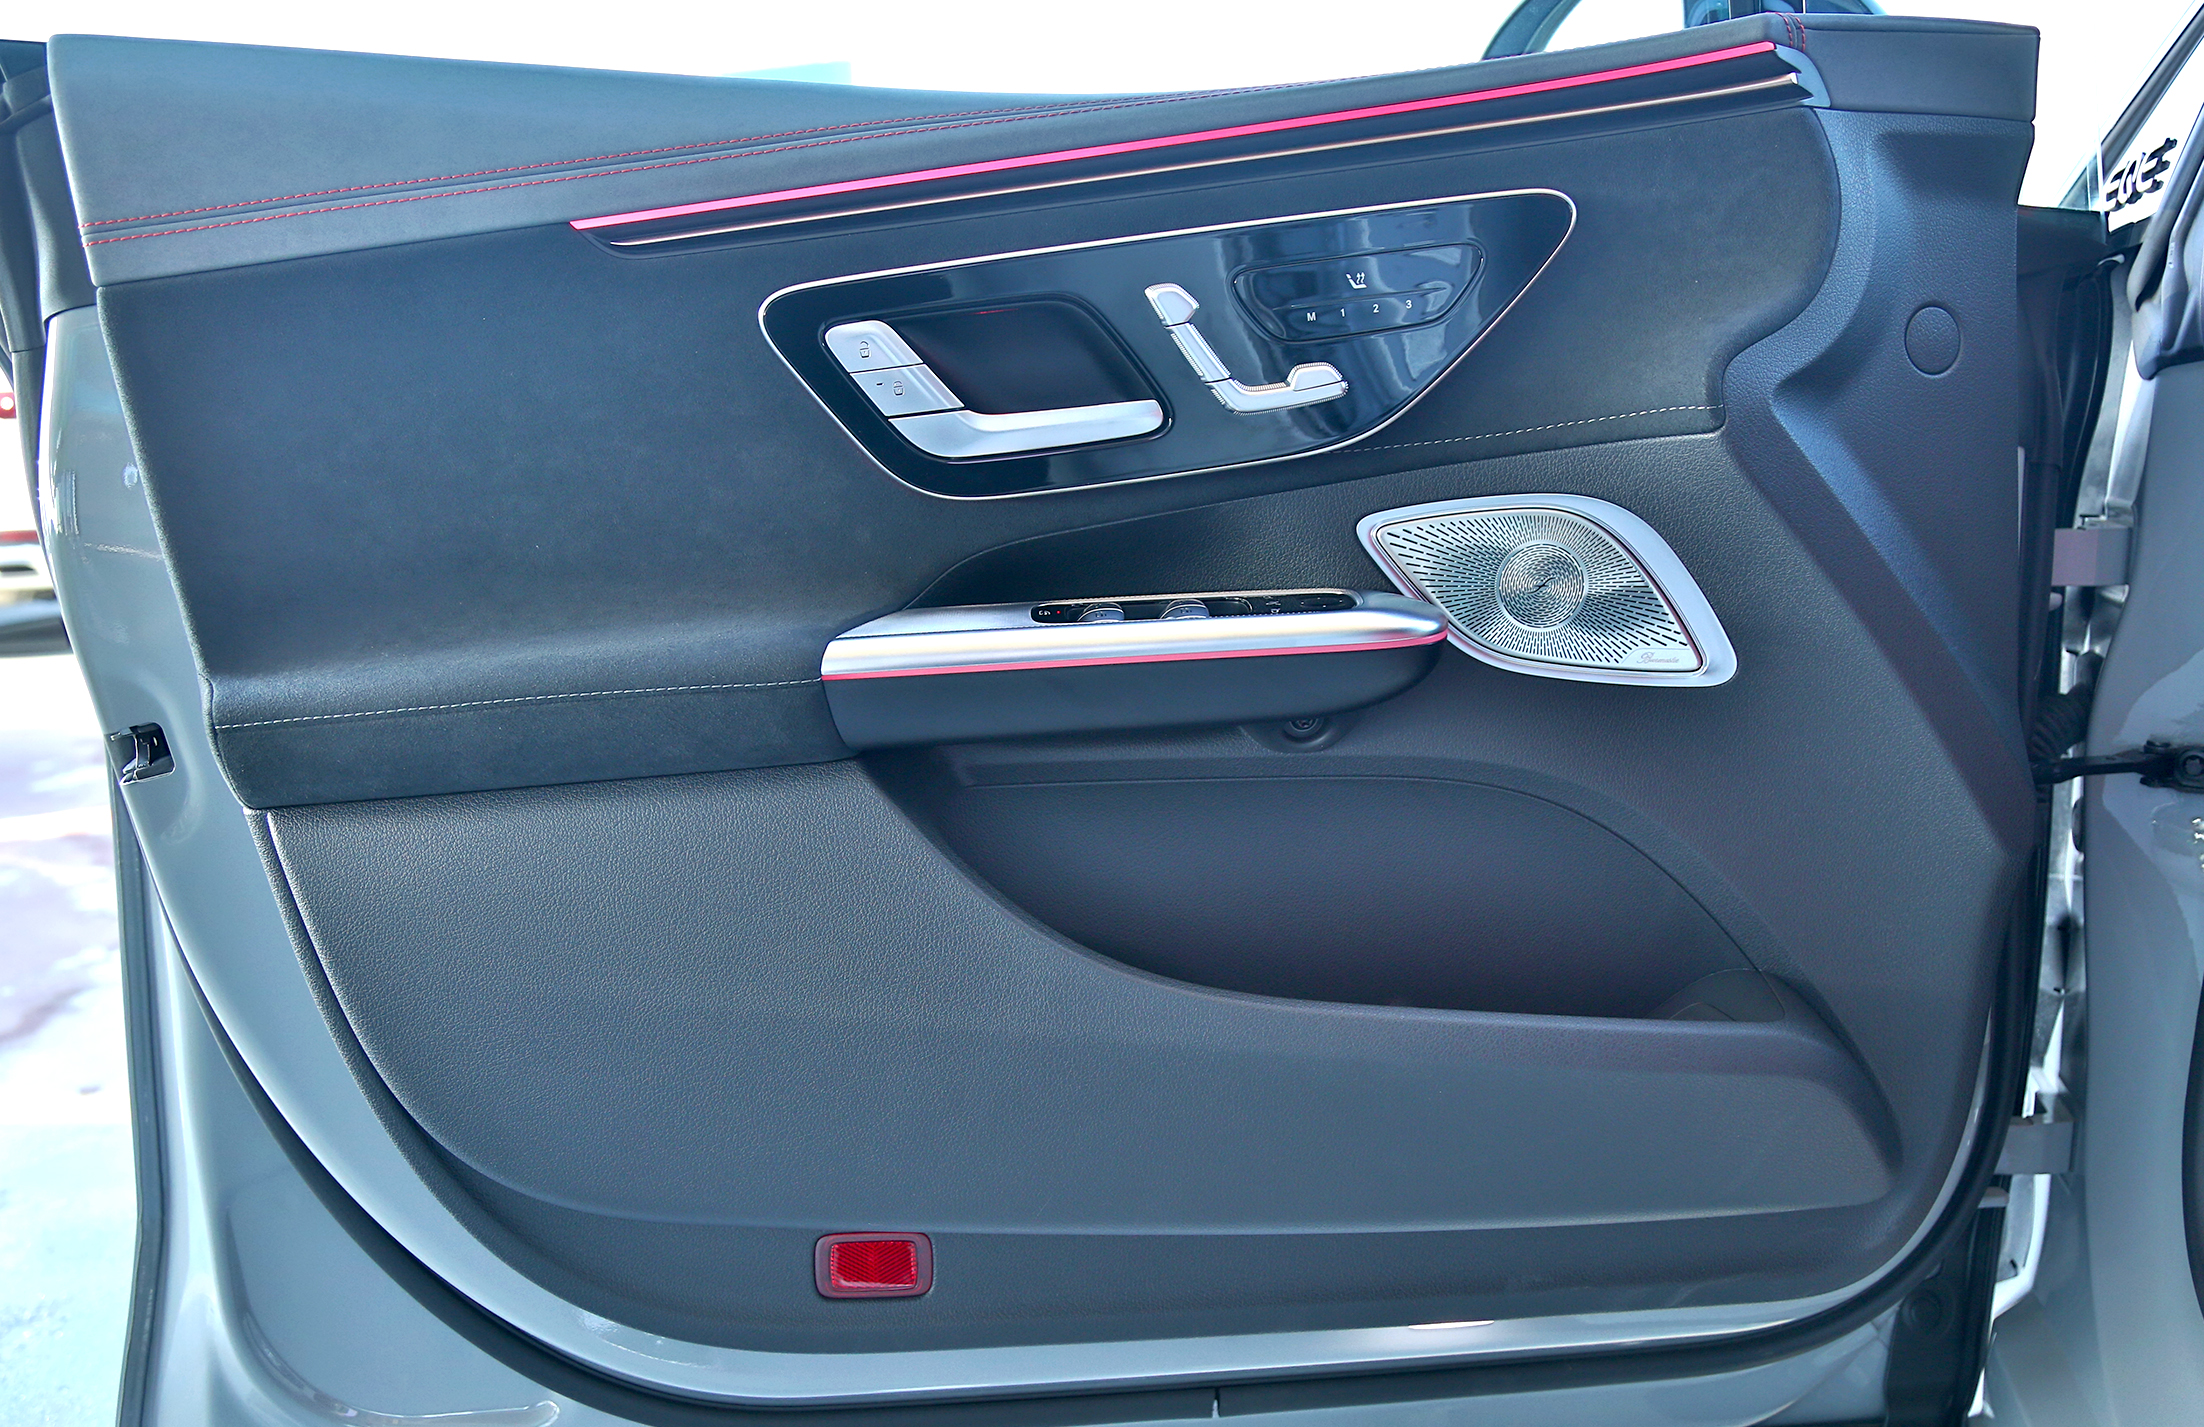 Mercedes-Benz EQE 43 AMG 4MATIC Electric Local Registration + 10% Prestige Motor Dubai